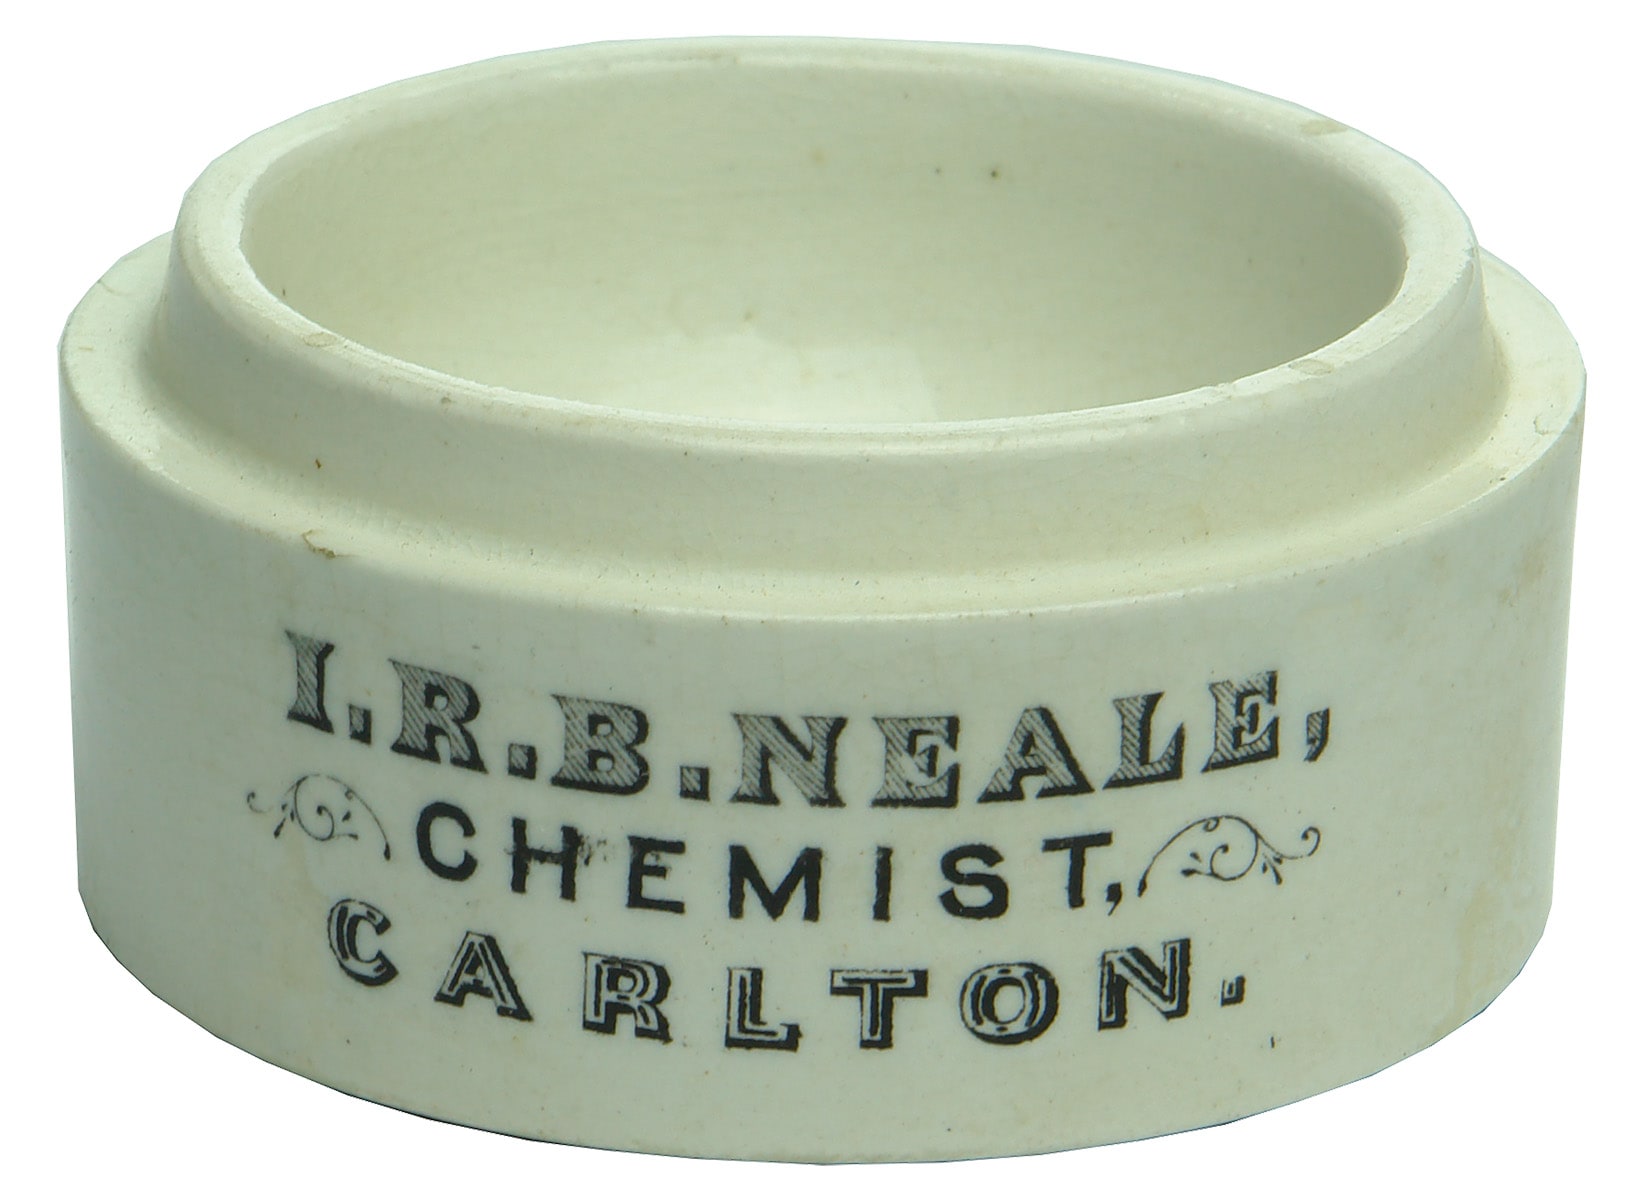 Neale Chemist Carlton Printed Pot Base